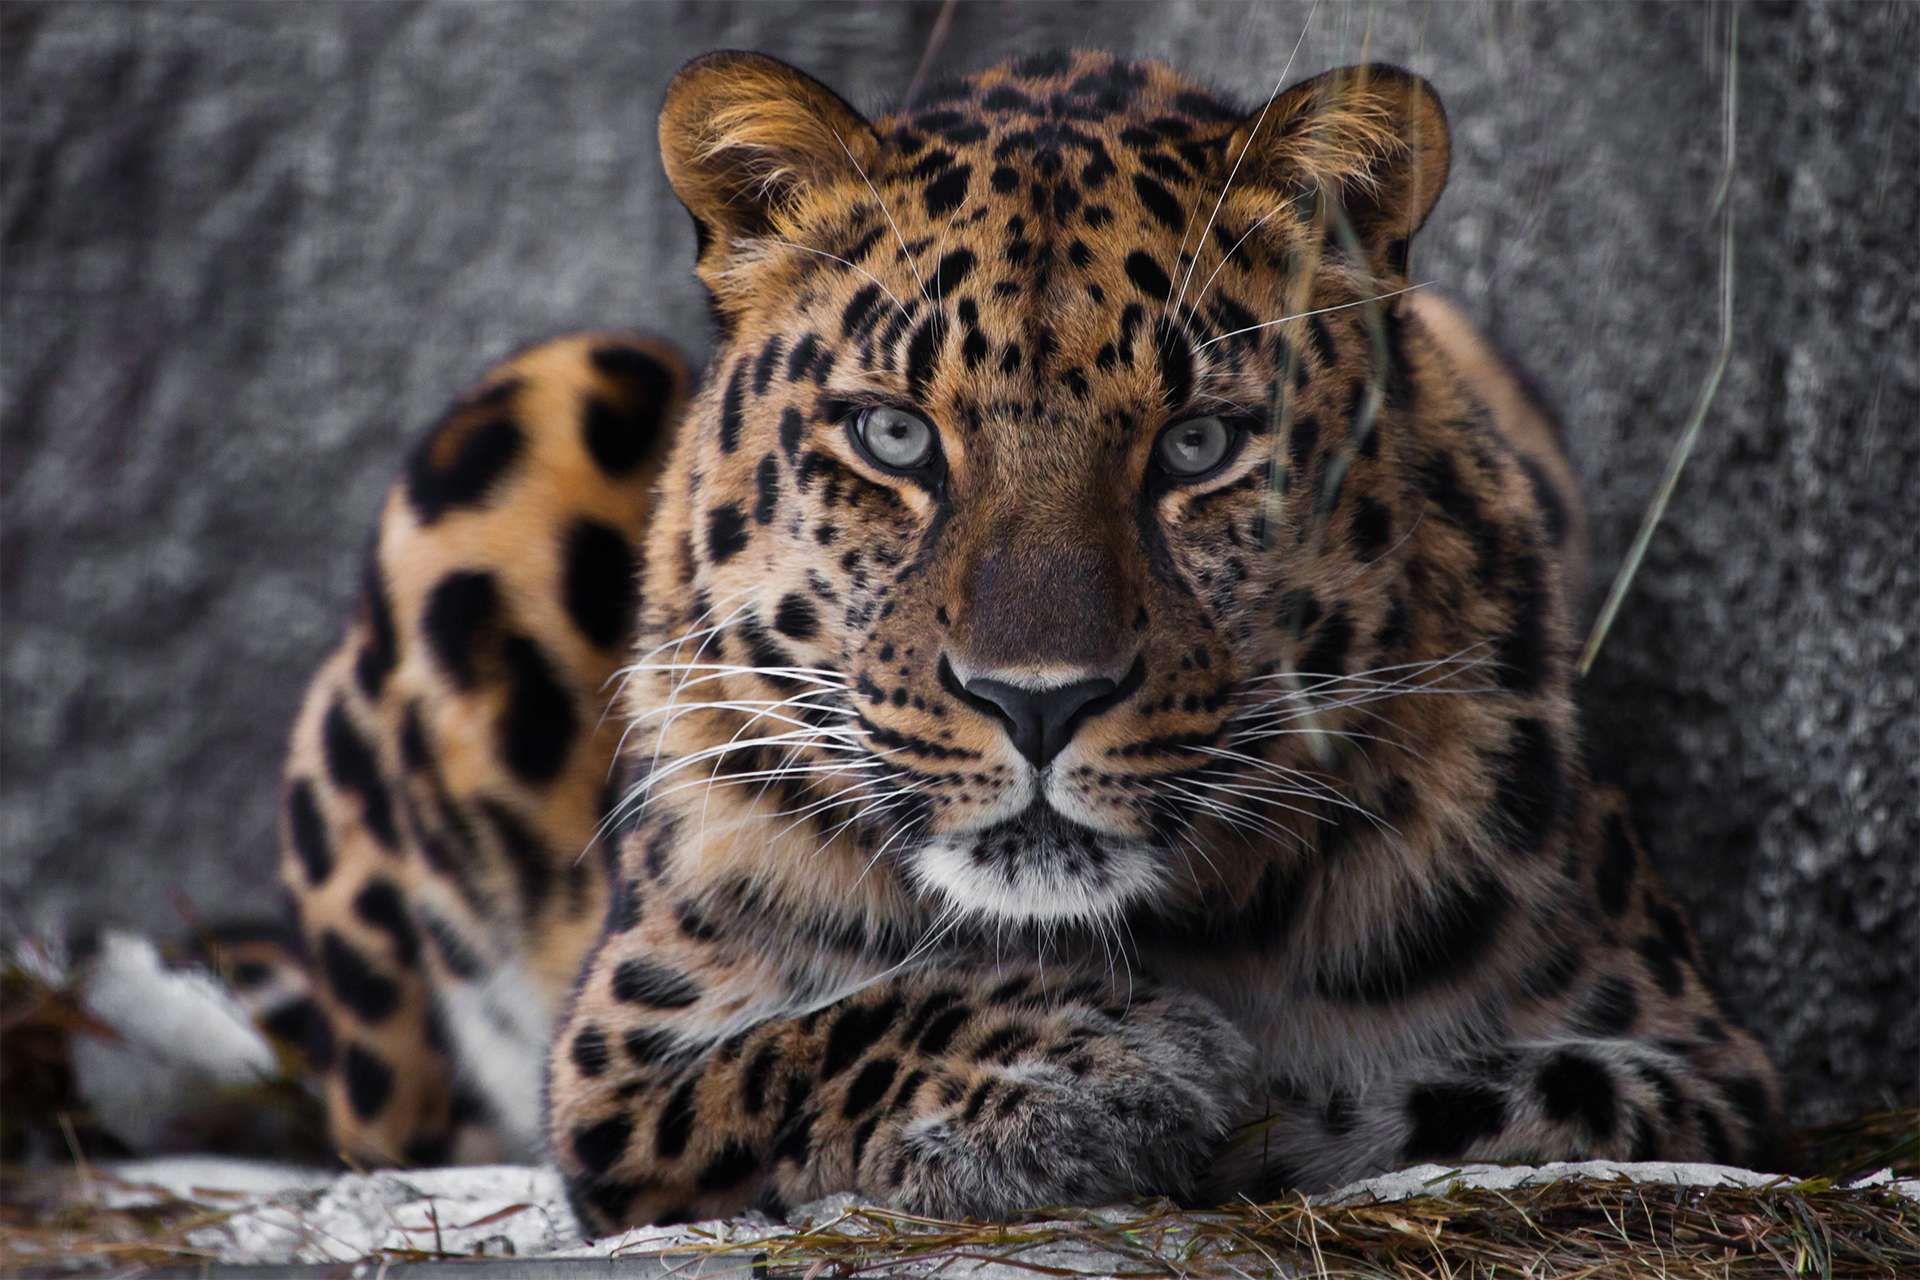 Leopardo de Amur, leopardo ruso, china, invierno, pelaje manchado, mirada intensa, ojos verdes